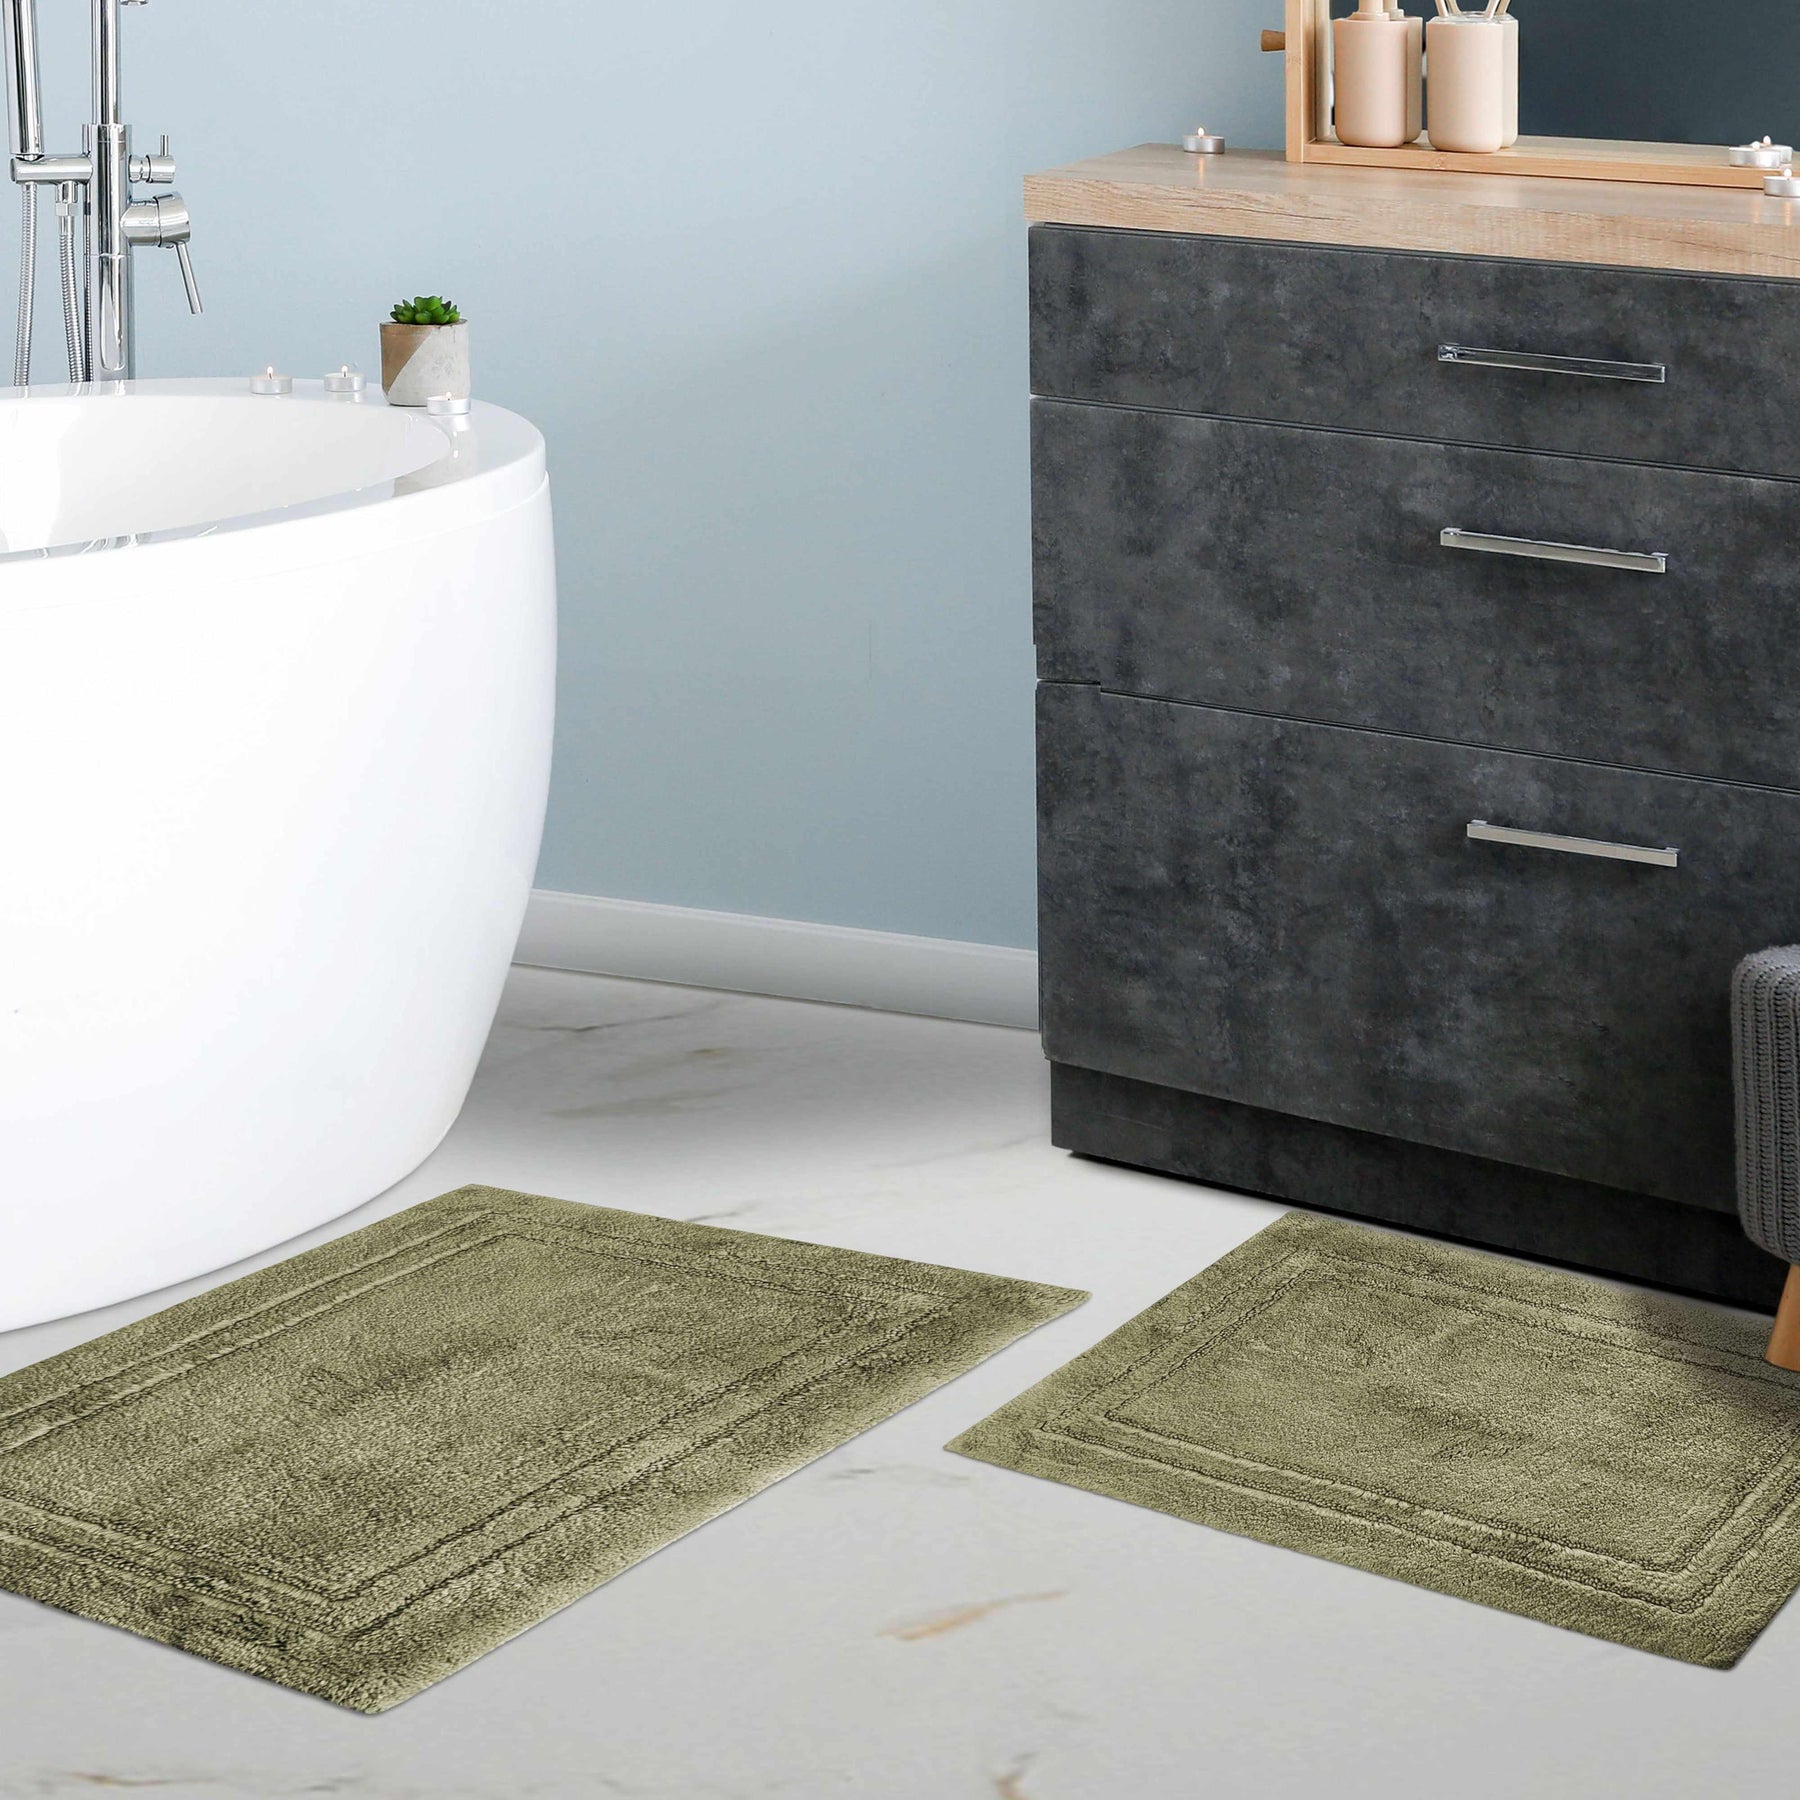 mats / 2 Bath mats / rubber mat / Bathroom mats of set 2 Pcs